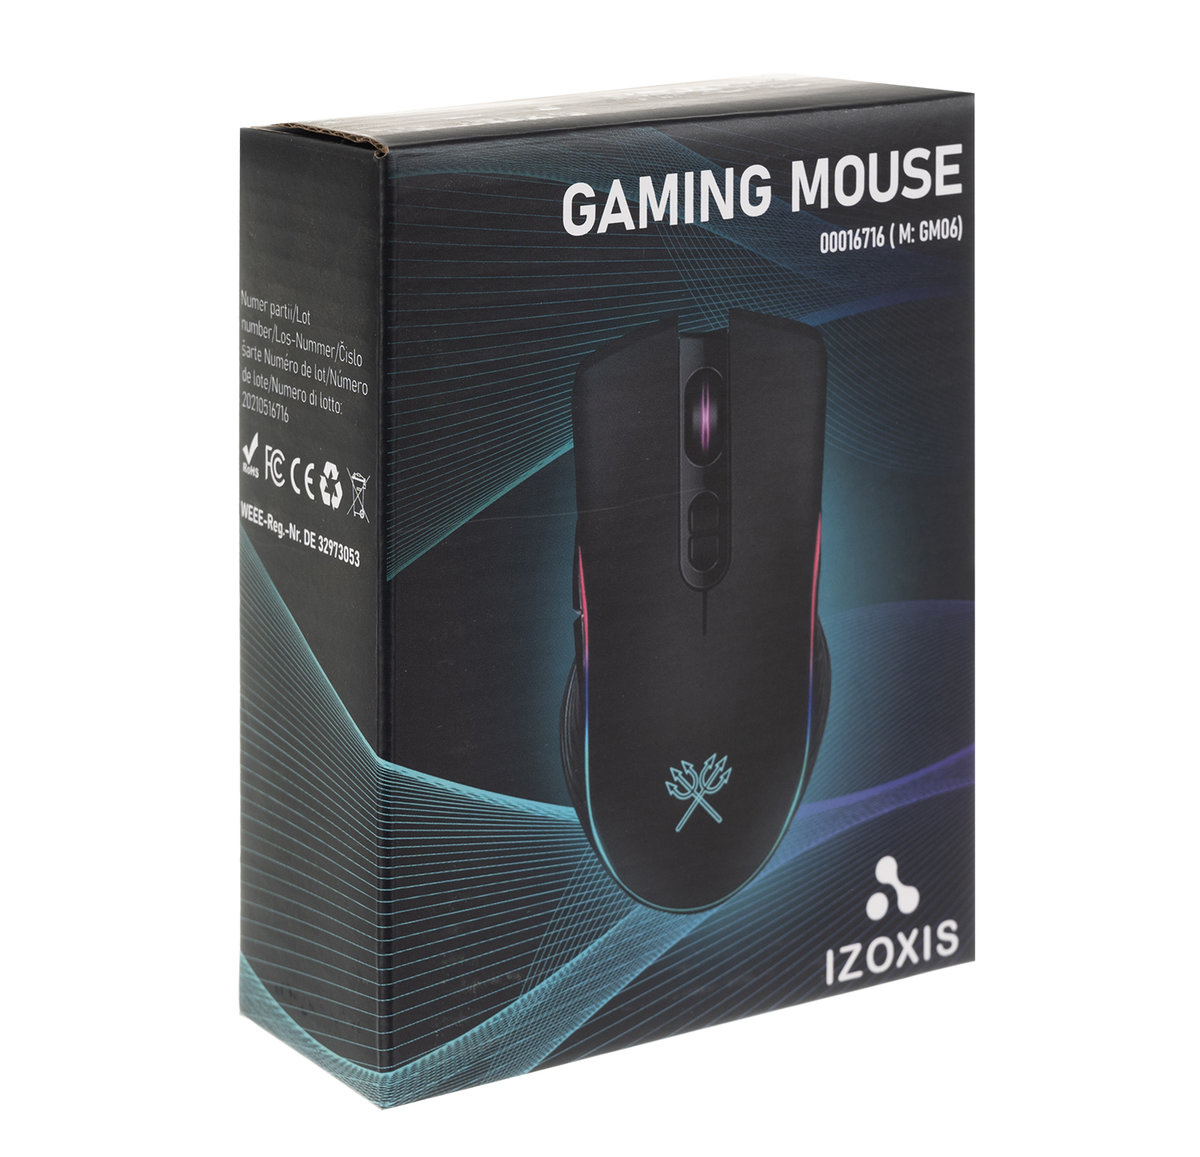 Freedo USB Wired Gaming Mouse, RGB LED Comfortable Grip Ergonomic